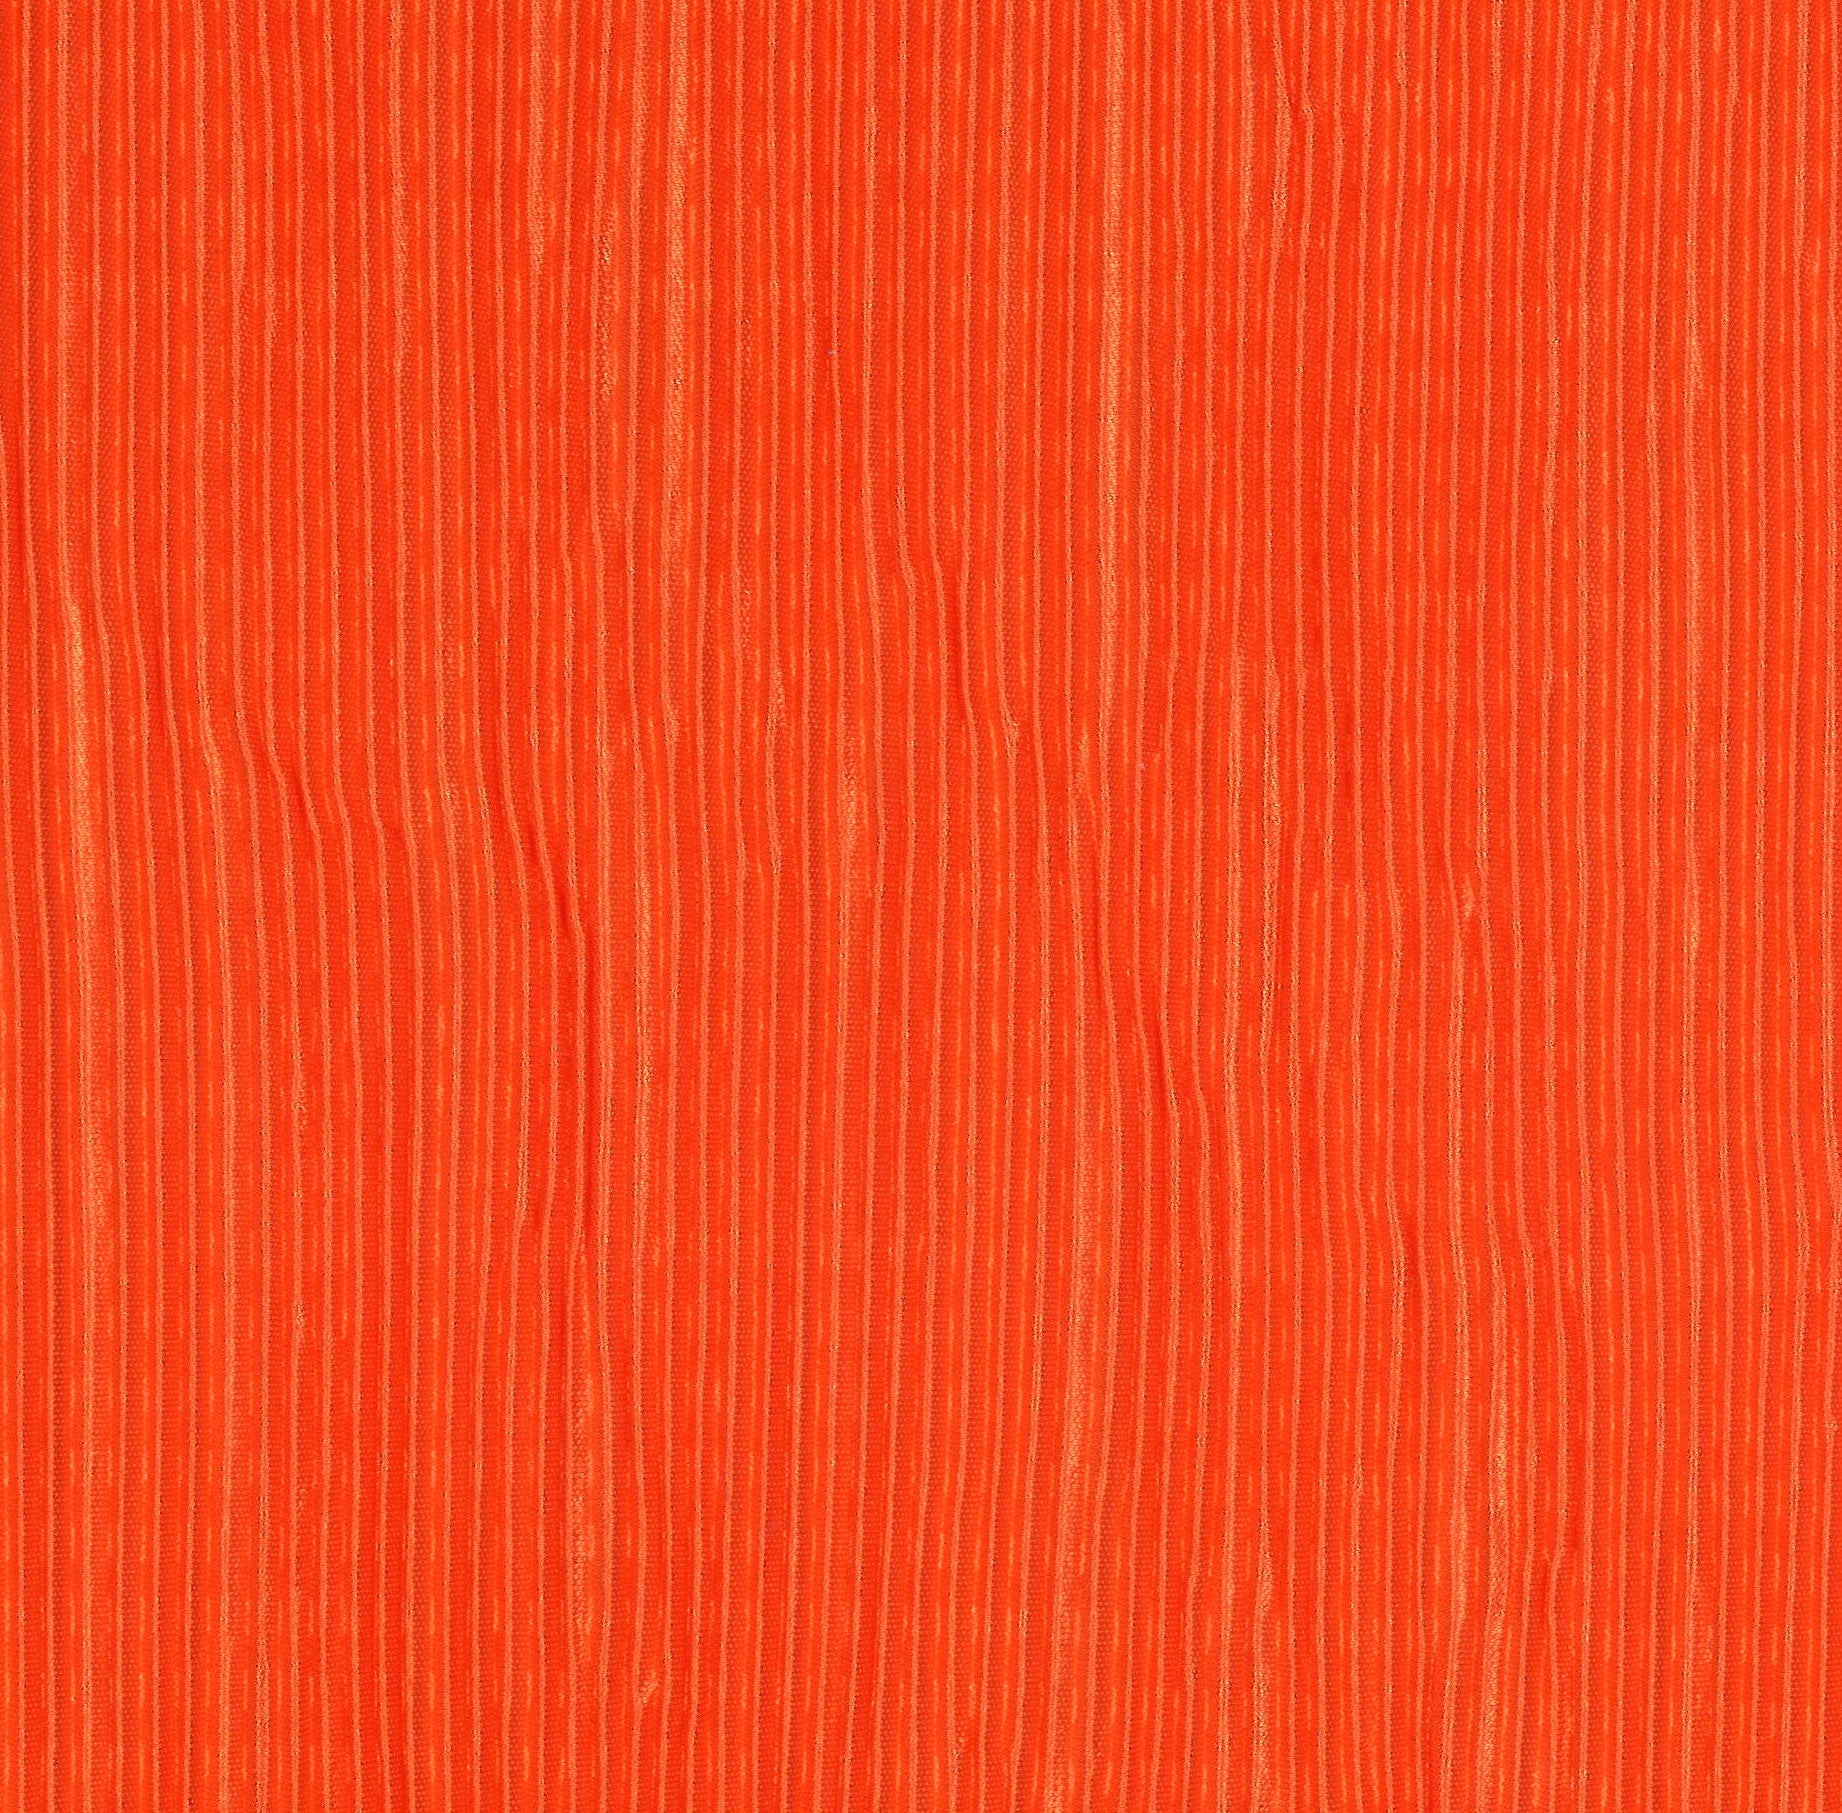 9761-01 Orange Polyester Pleat Plain Dyed 100% 180g/yd 56&quot; knit orange plain dyed pleat polyester Solid Color, Pleat - knit fabric - woven fabric - fabric company - fabric wholesale - fabric b2b - fabric factory - high quality fabric - hong kong fabric - fabric hk - acetate fabric - cotton fabric - linen fabric - metallic fabric - nylon fabric - polyester fabric - spandex fabric - chun wing hing - cwh hk - fabric worldwide ship - 針織布 - 梳織布 - 布料公司- 布料批發 - 香港布料 - 秦榮興